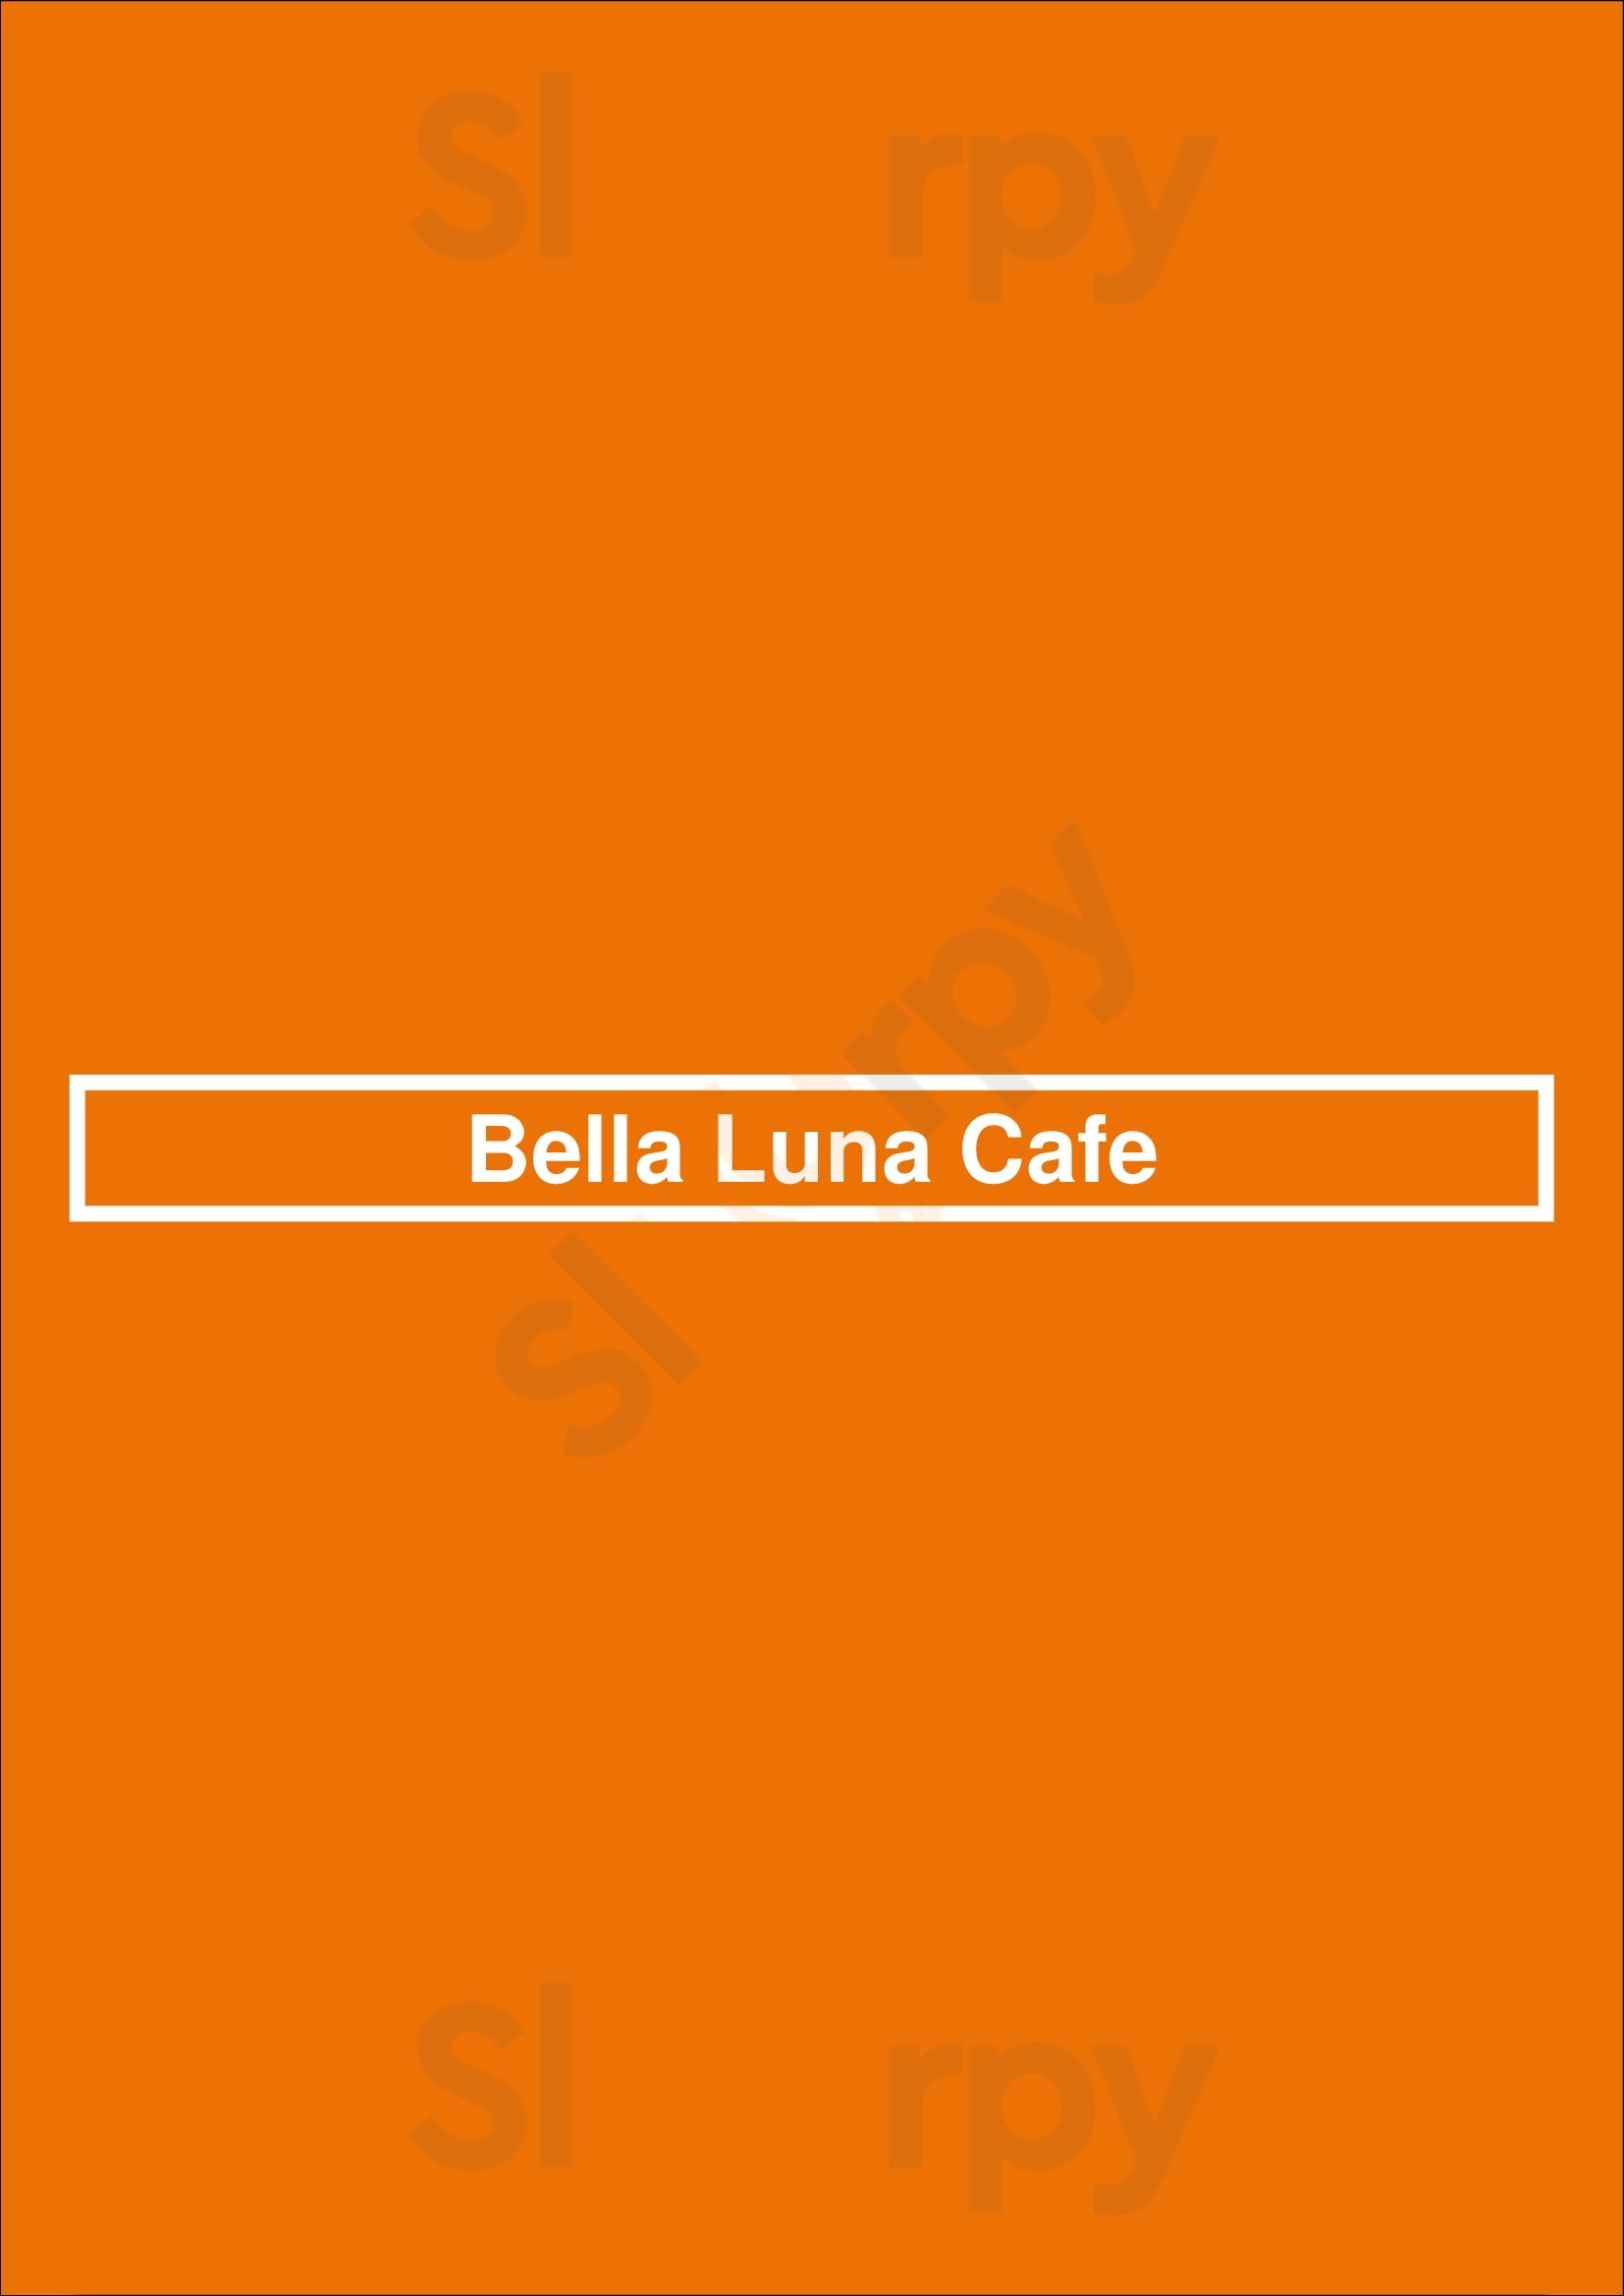 Bella Luna Cafe Chicago Menu - 1